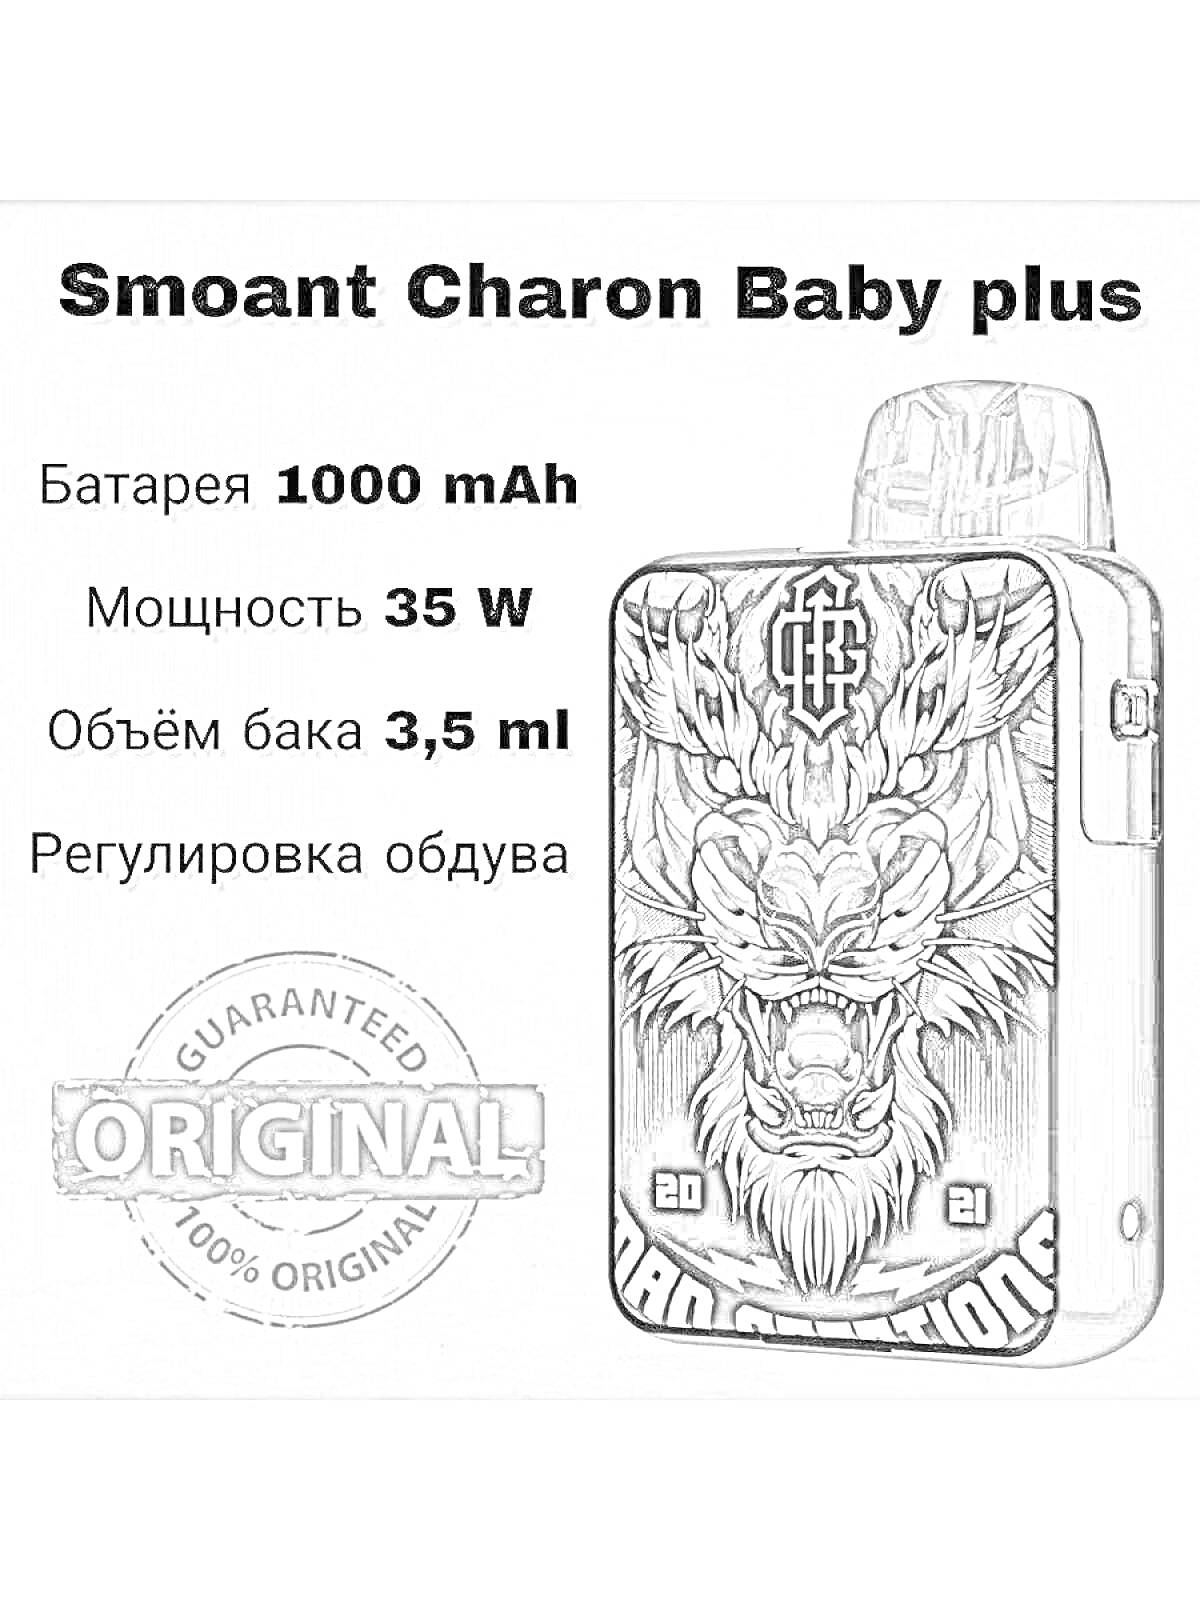 Раскраска Электронная сигарета Smoant Charon Baby Plus с батареей 1000 mAh, мощностью 35 W, объемом бака 3,5 ml и регулировкой обдува